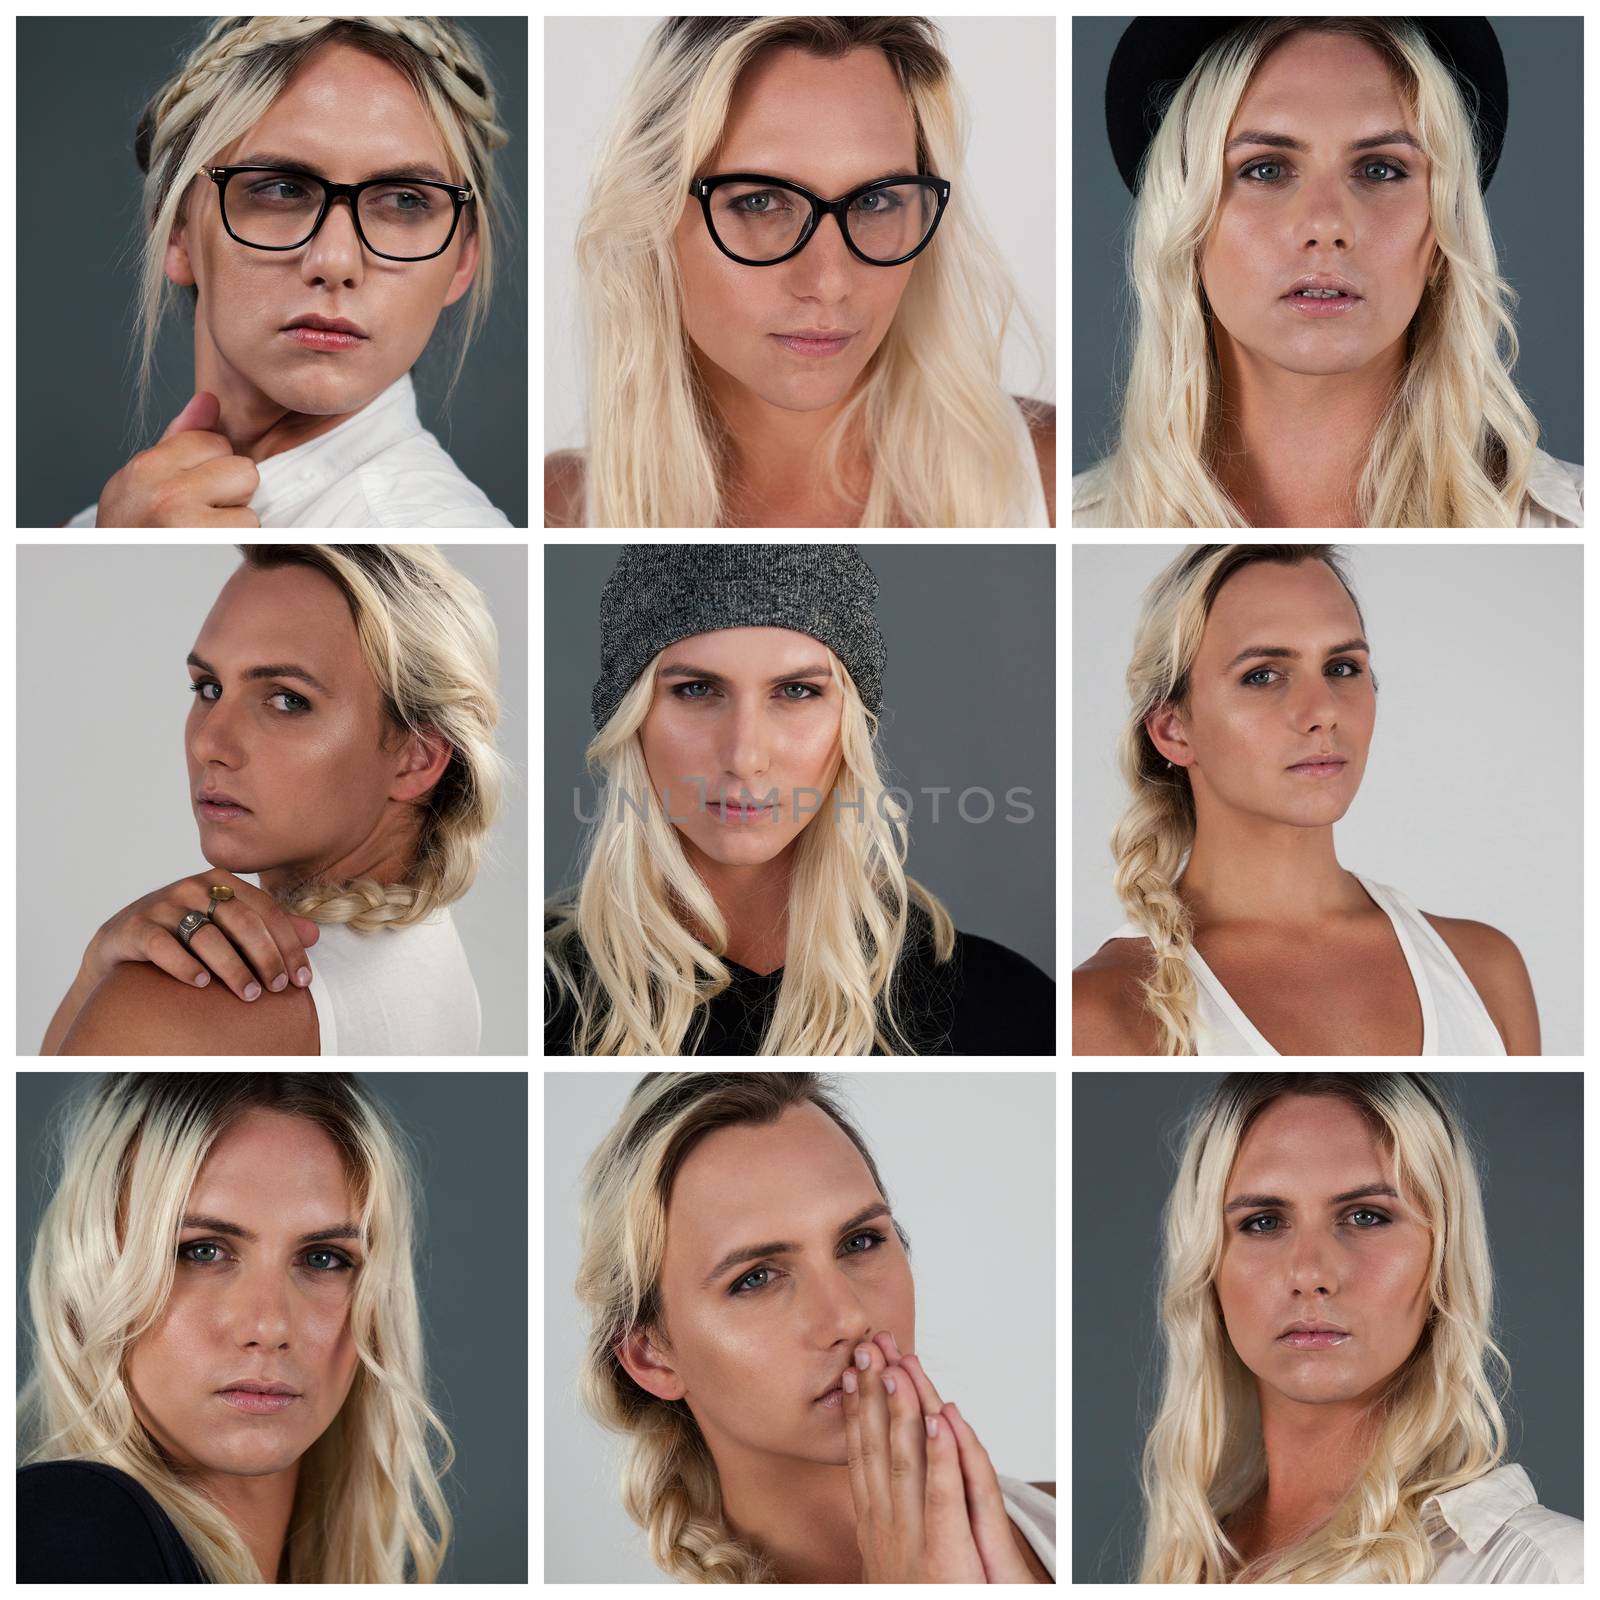 People collage portrait 3x3 by Wavebreakmedia